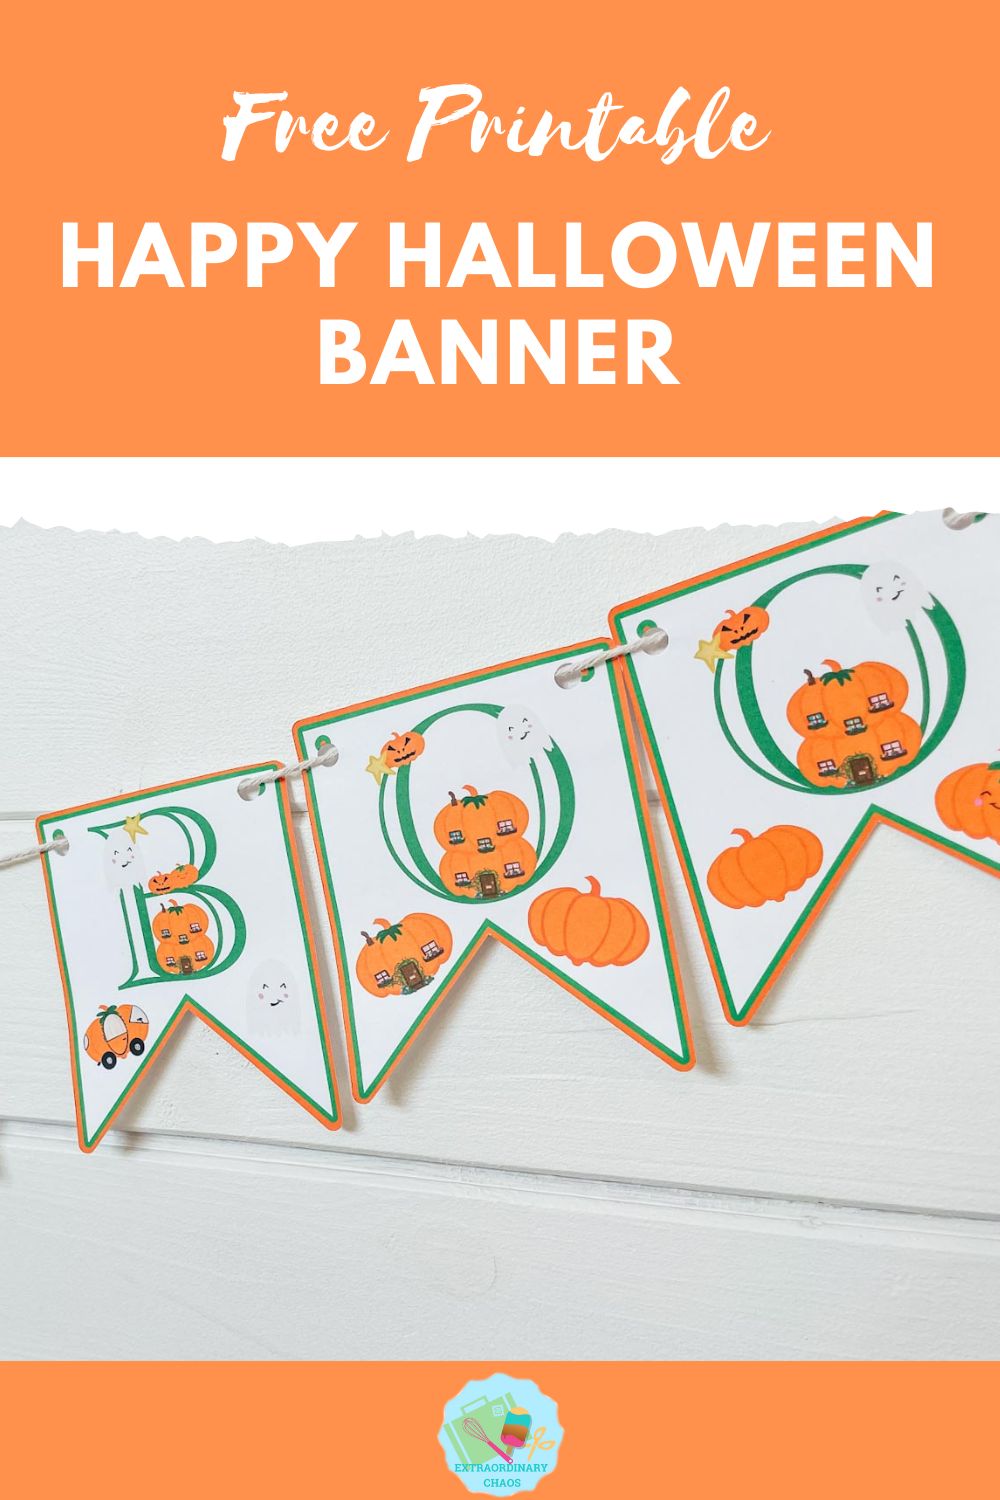 Free printable Happy Halloween Banner